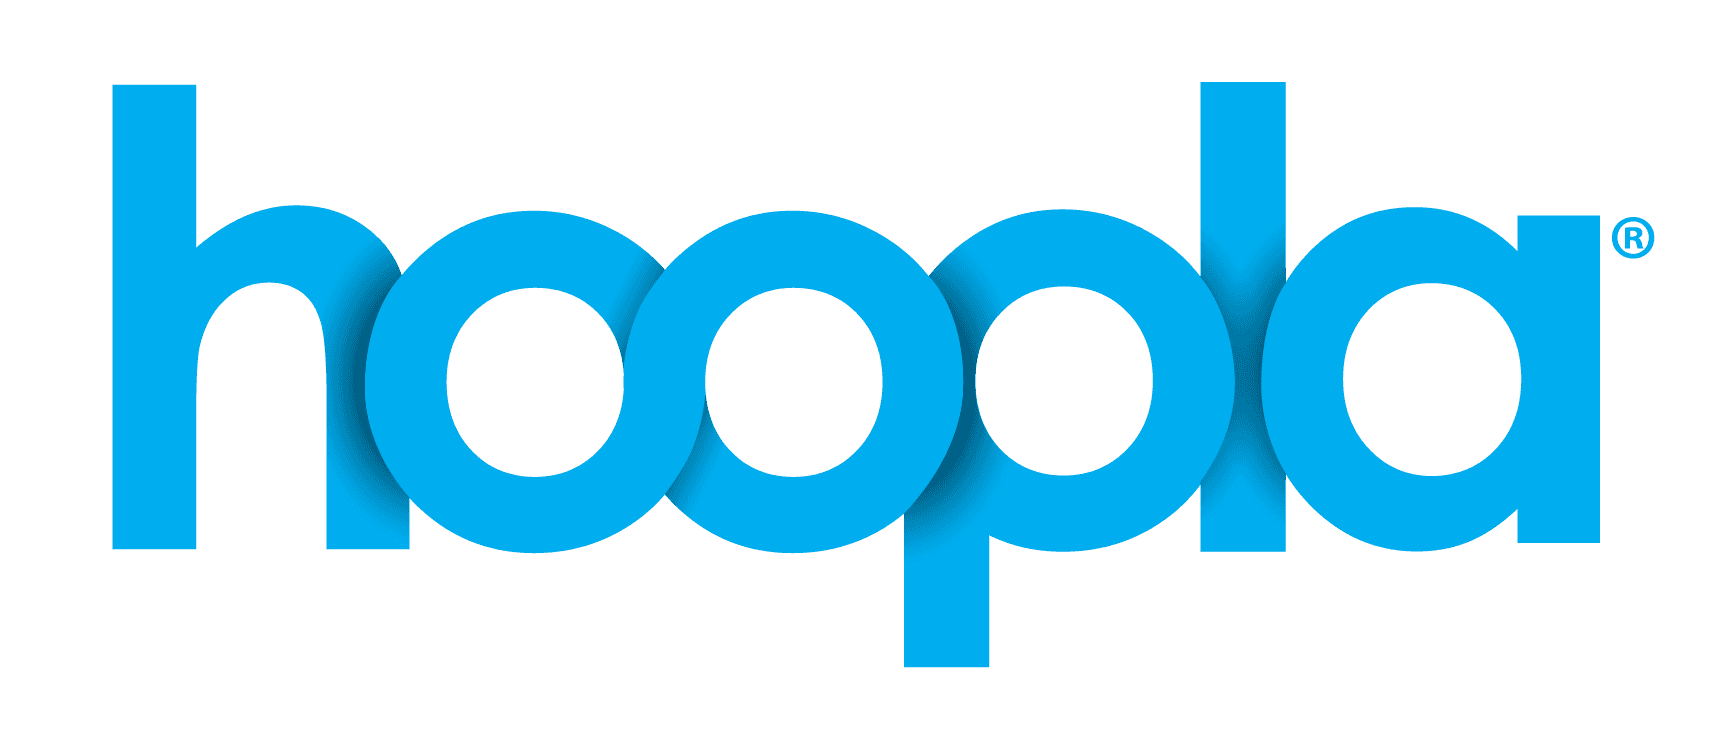 Hoopla Logo - hoopla or download movies, music, audiobooks